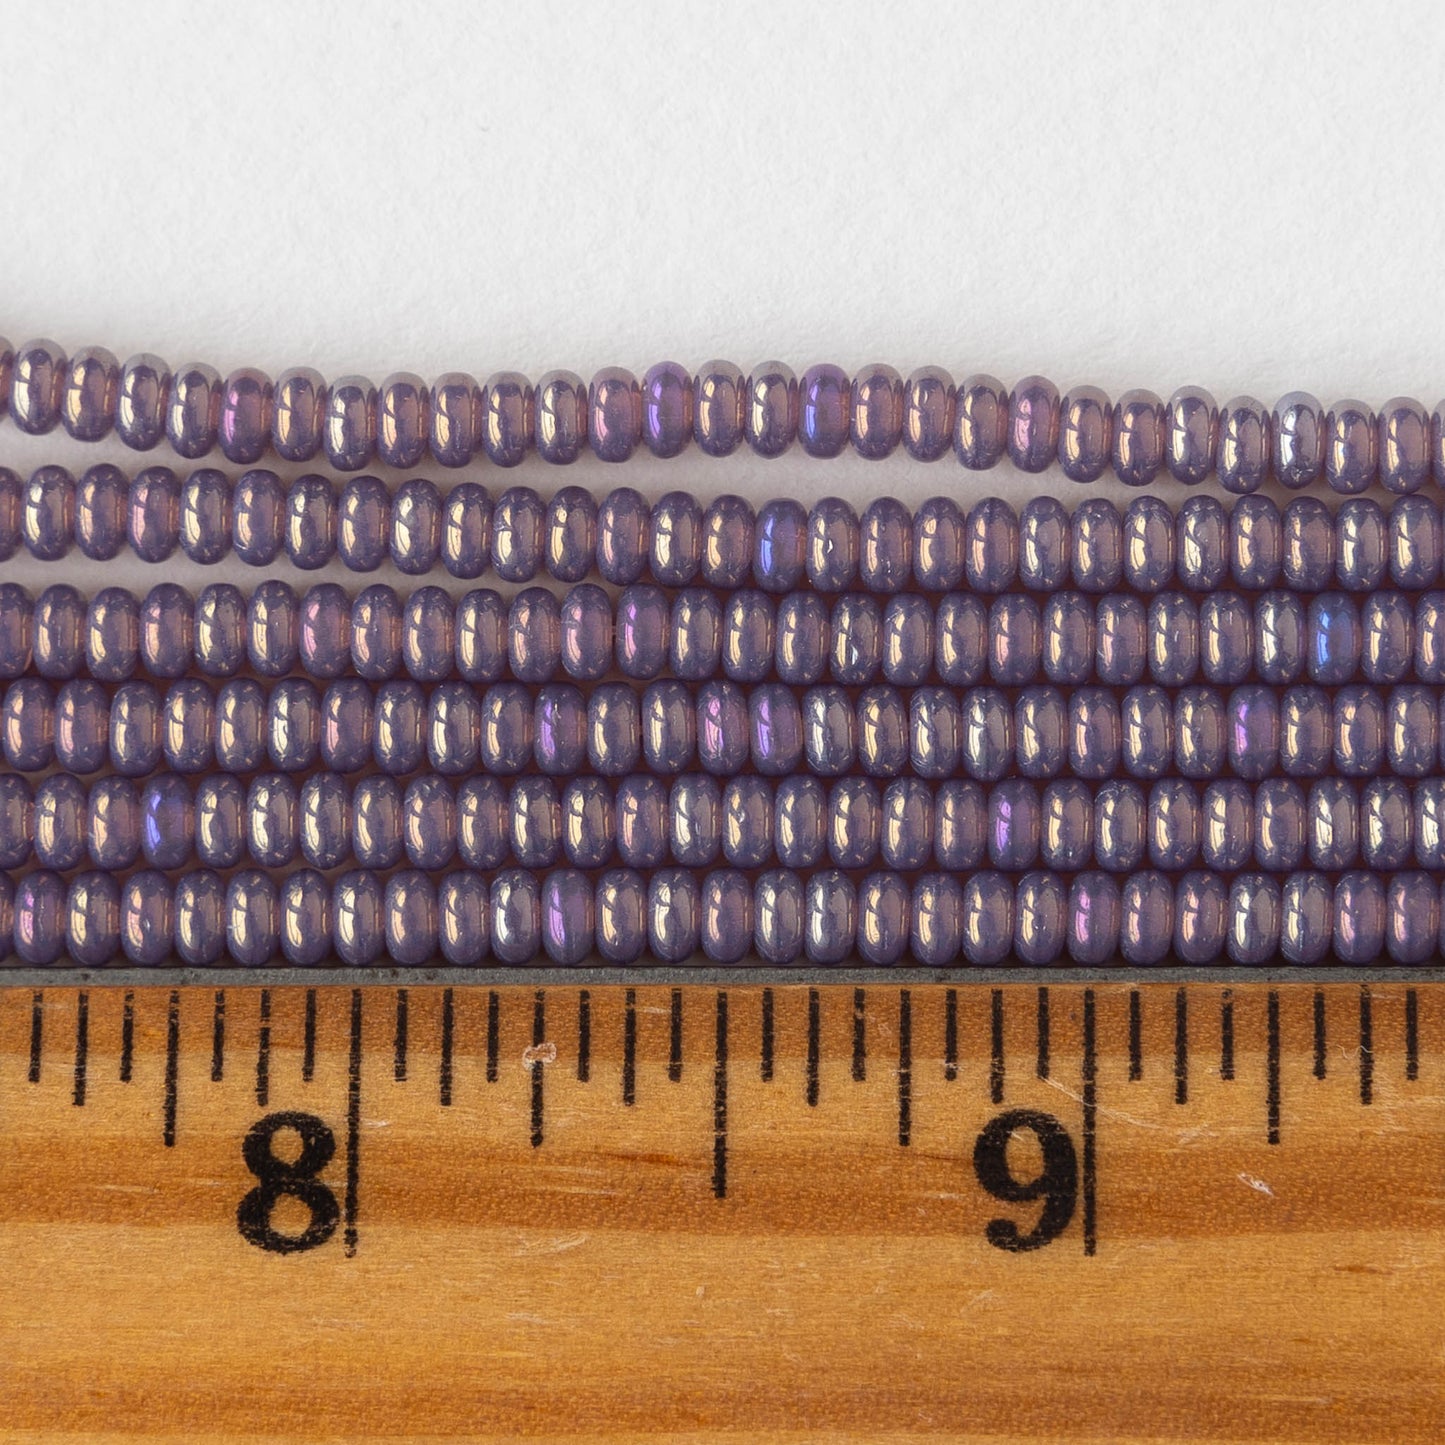 3mm Rondelle Beads - Opaline Lavender Luster Iris - 100 Beads